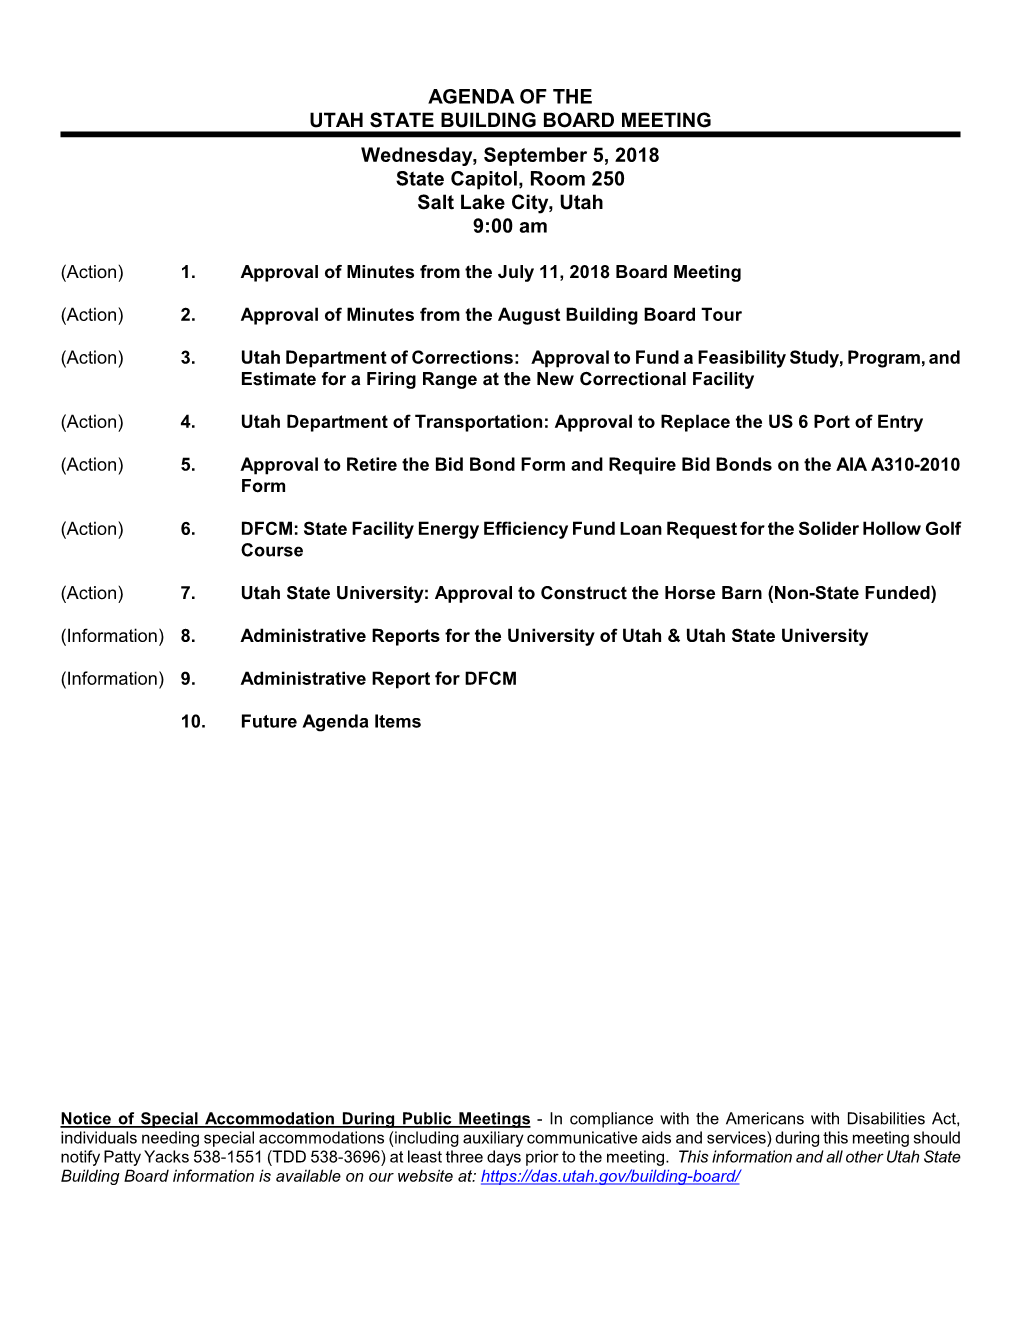 Agenda of the Utah State Building Board Meeting